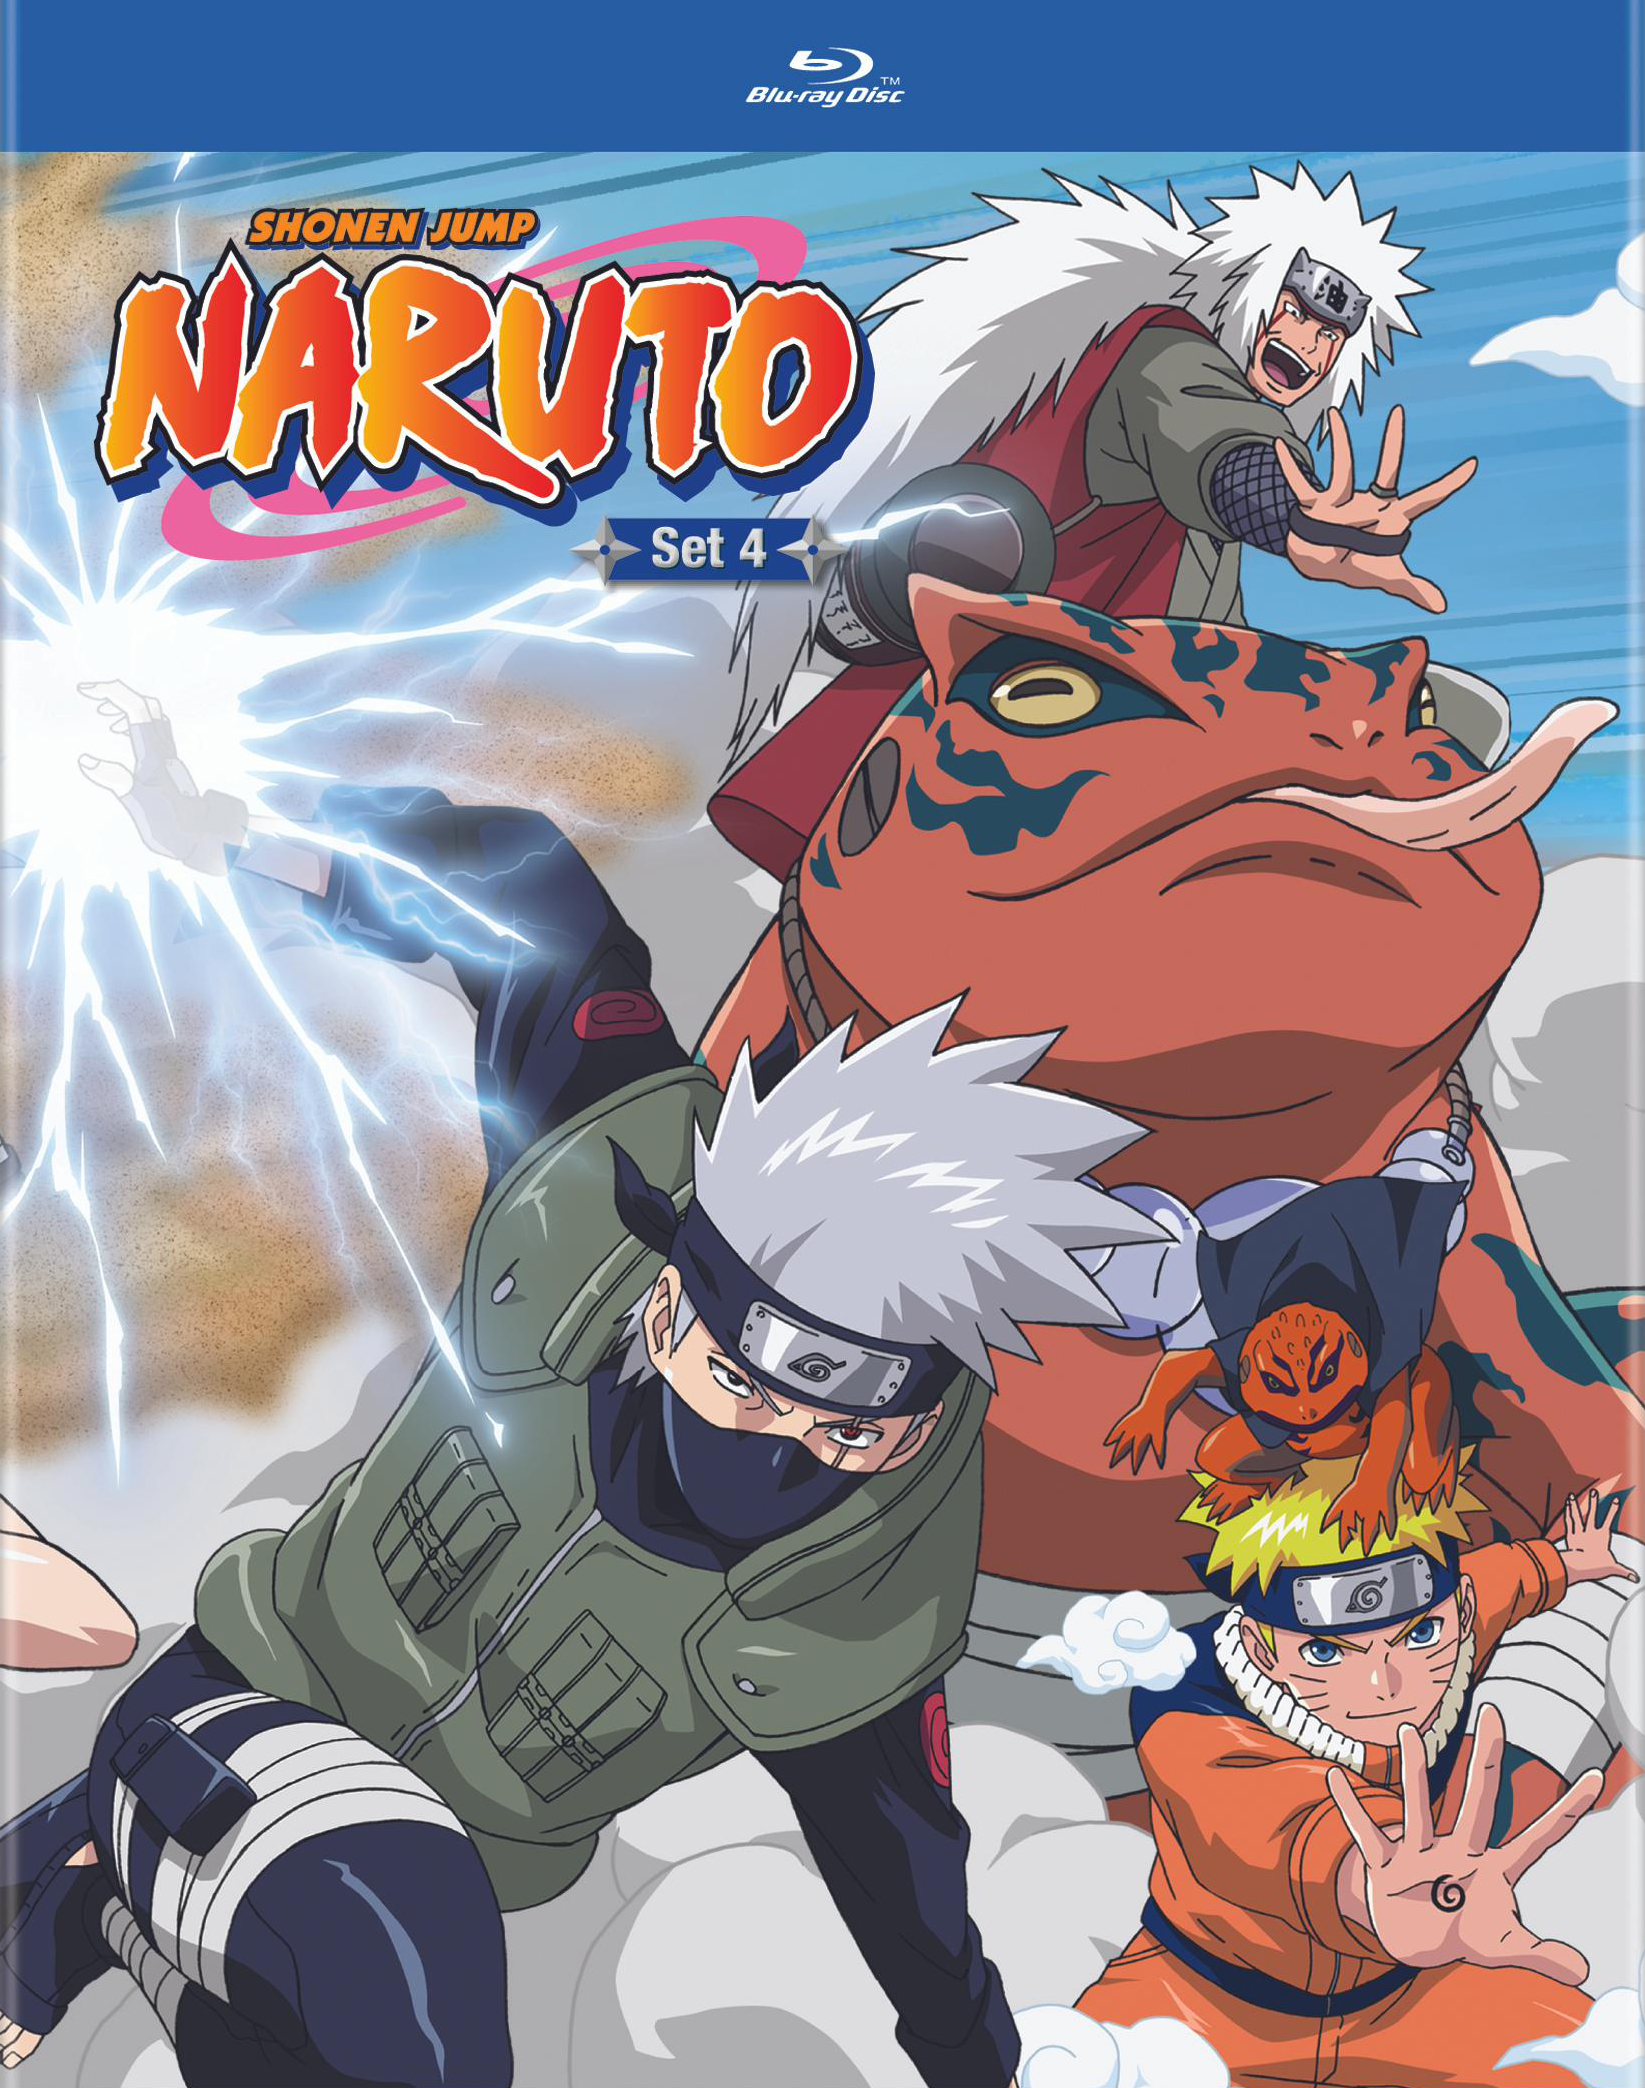 Road to Ninja: Naruto the Movie [Blu-ray] [2012] - Best Buy